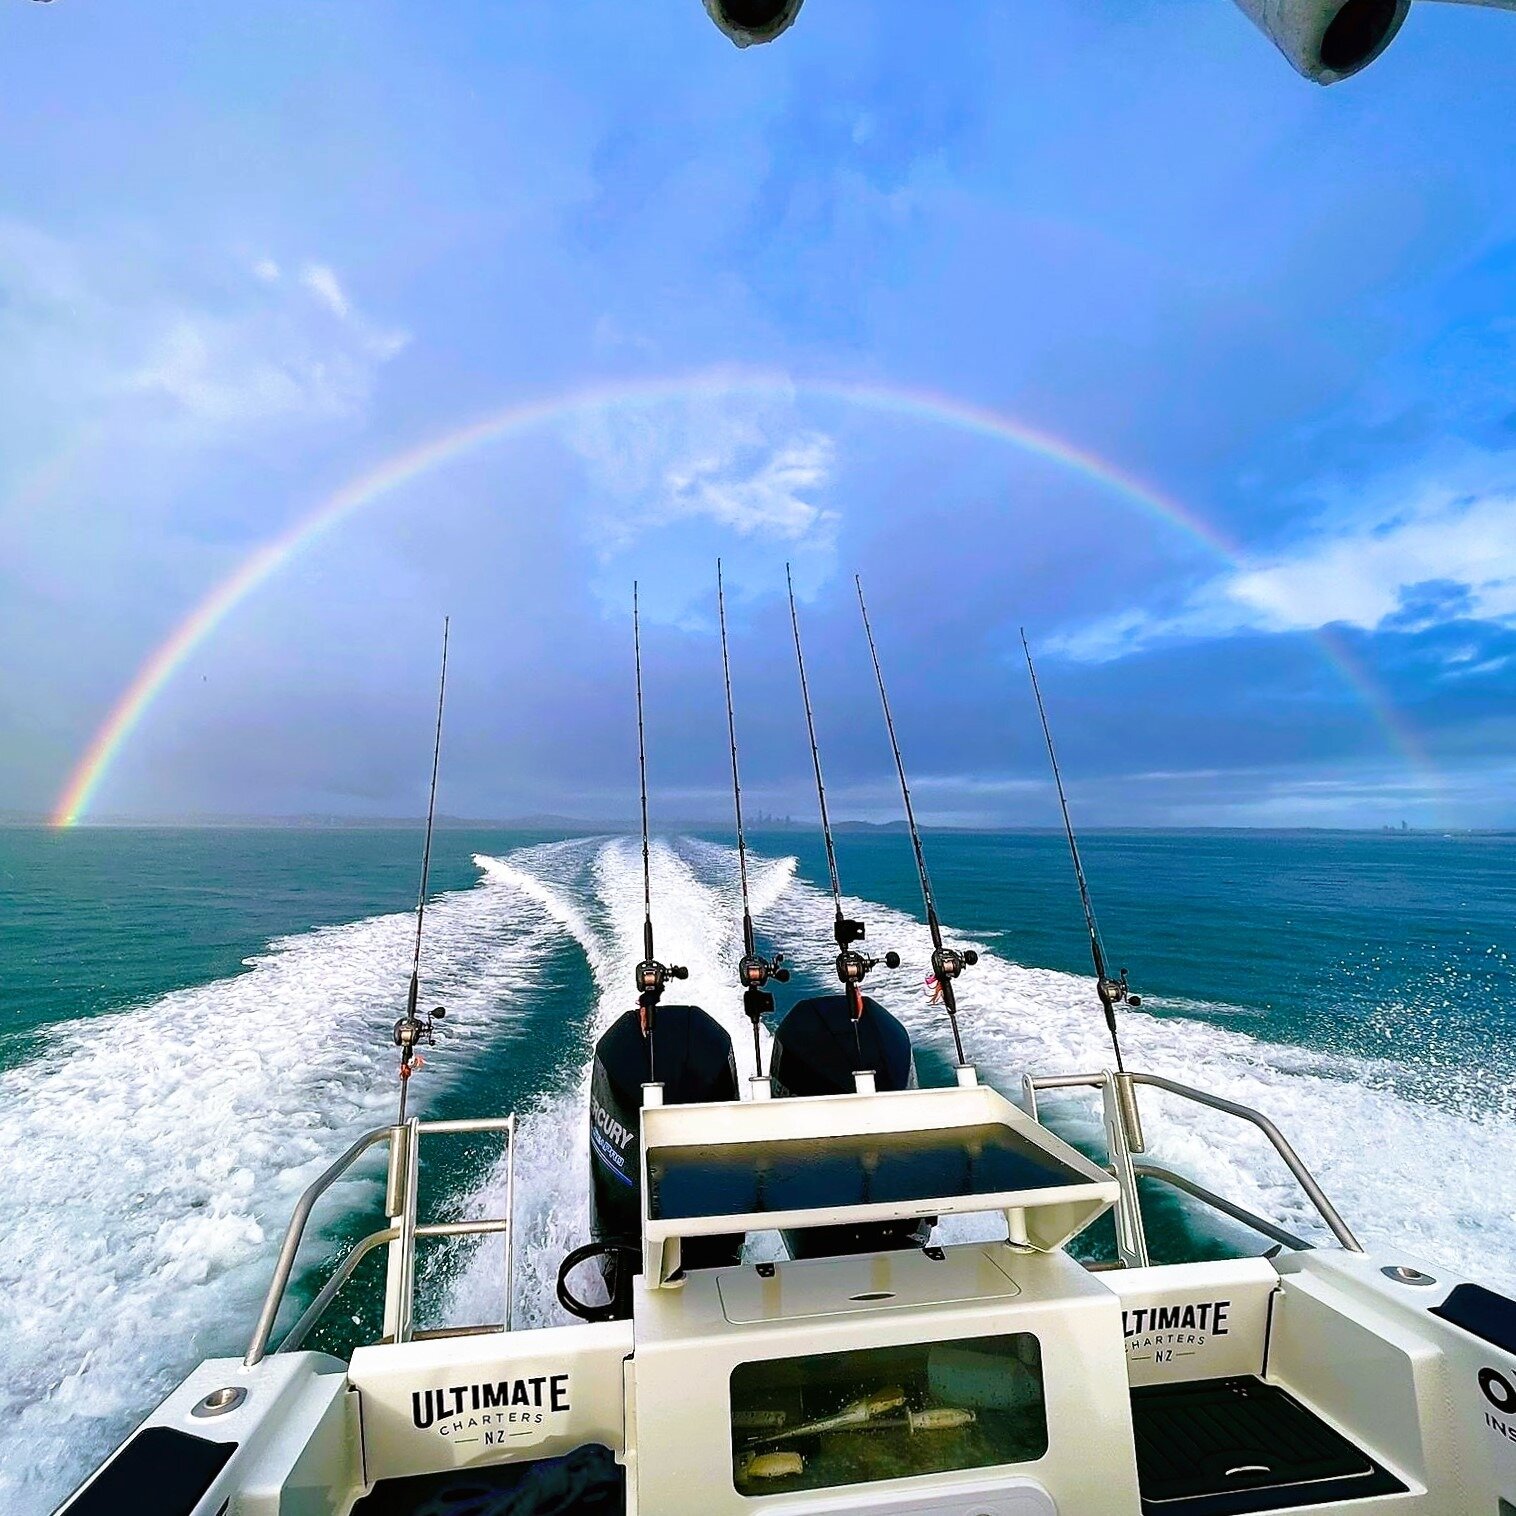 The calm before the storm last week

@okuma_nz Komodo reels lined up ready for duty

#ultimatechartersnewzealand #ultimatecharters #fishingcharters #rainbow #okuma #lurefishing